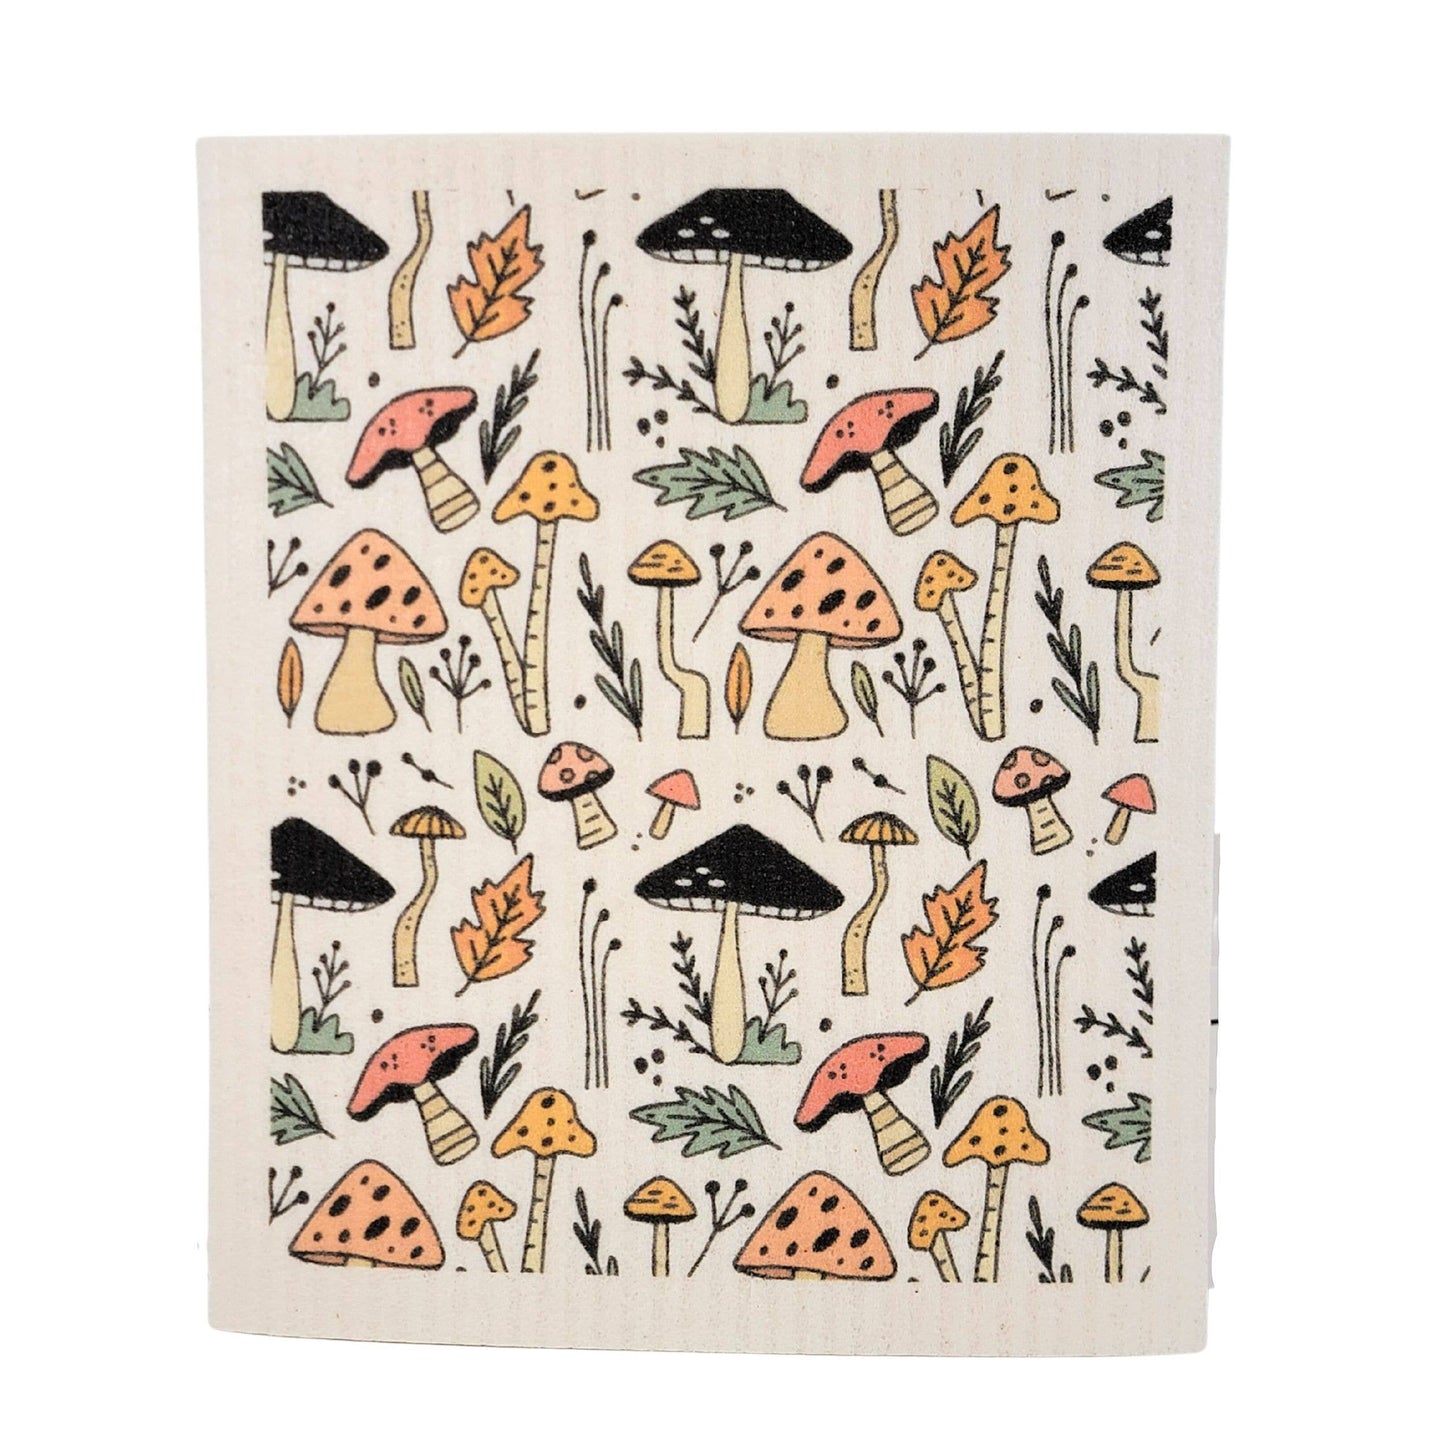 Driftless Studios - Summer Mushroom Pattern Swedish Dishcloths - Sponge cloth